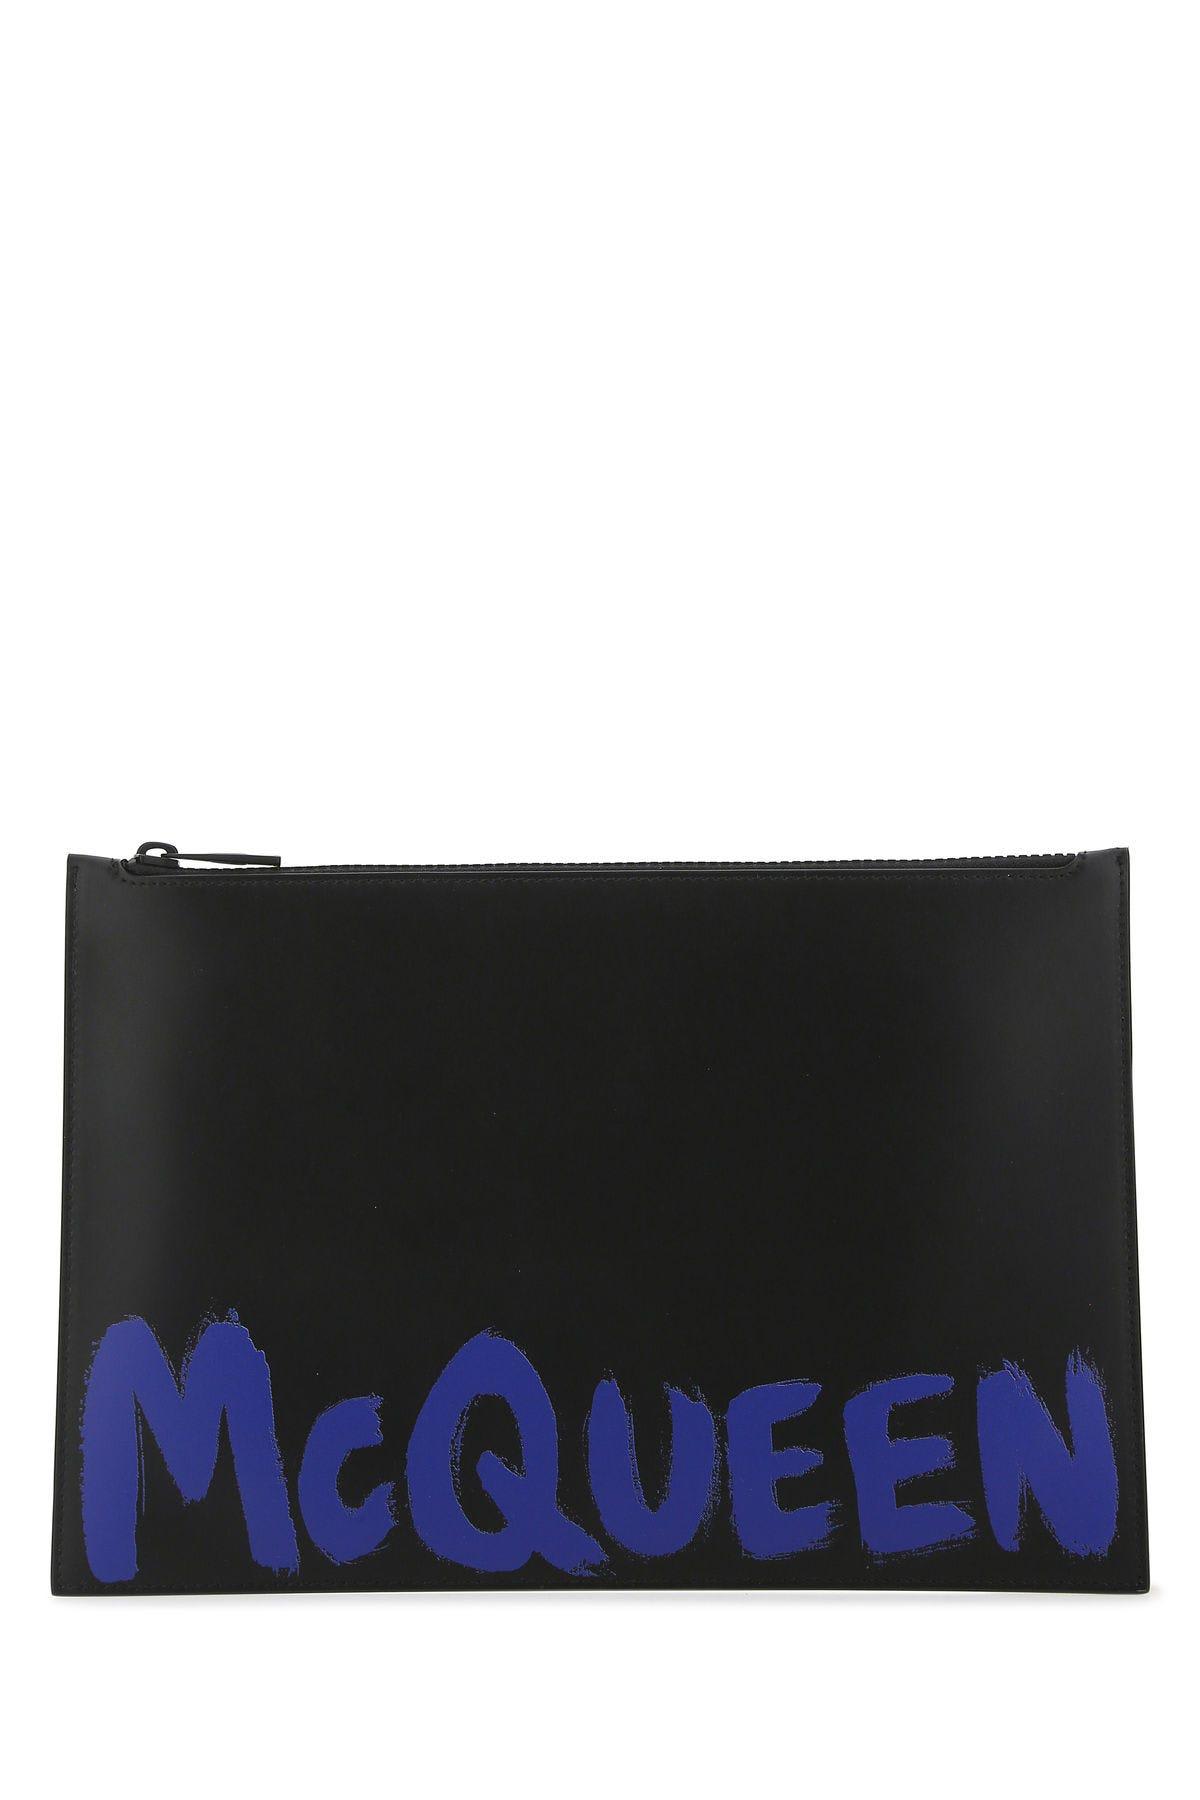 Alexander McQueen Black Leather Clutch